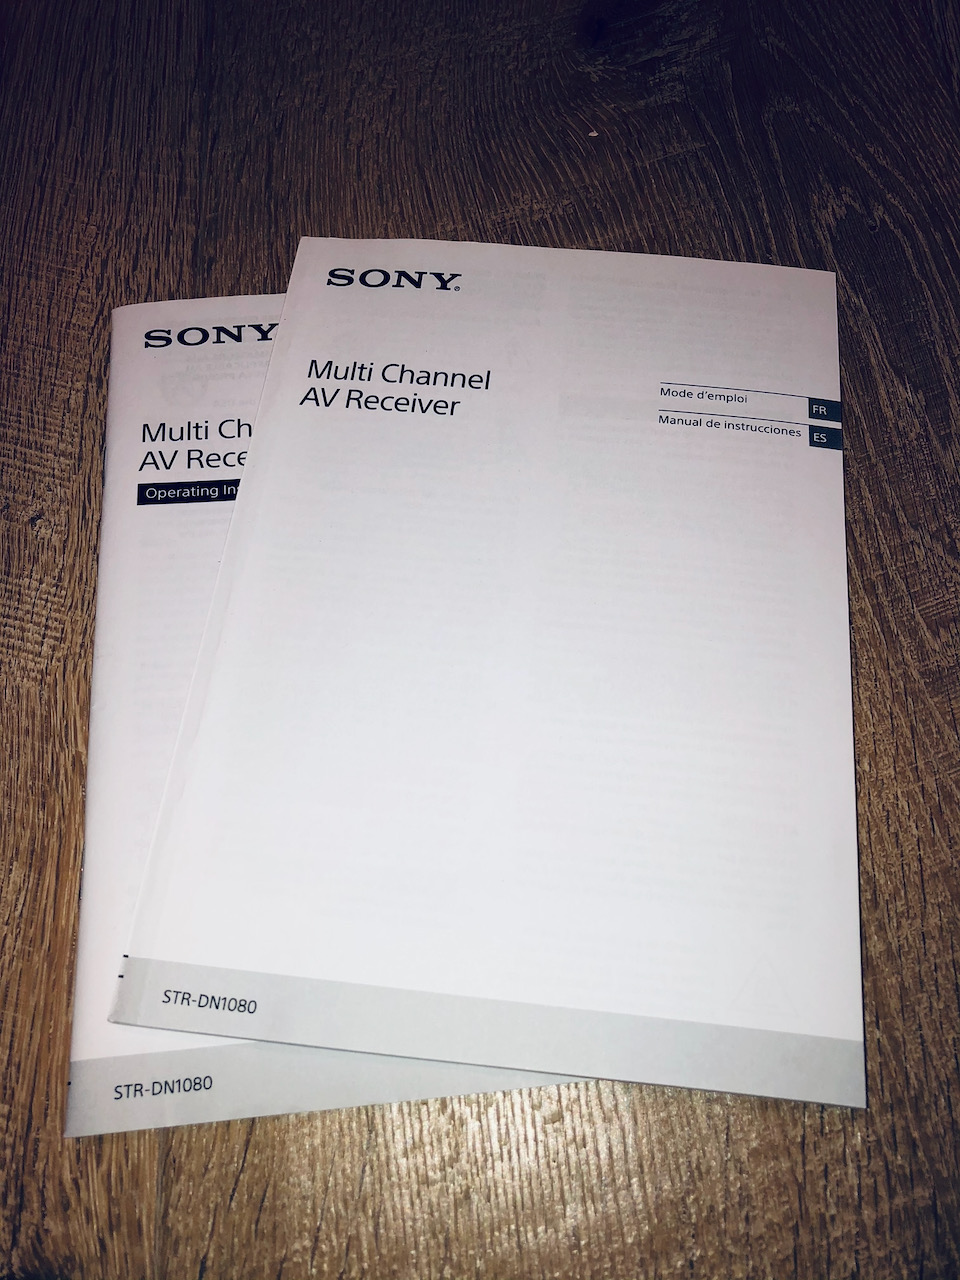 Sony_manuals.jpeg